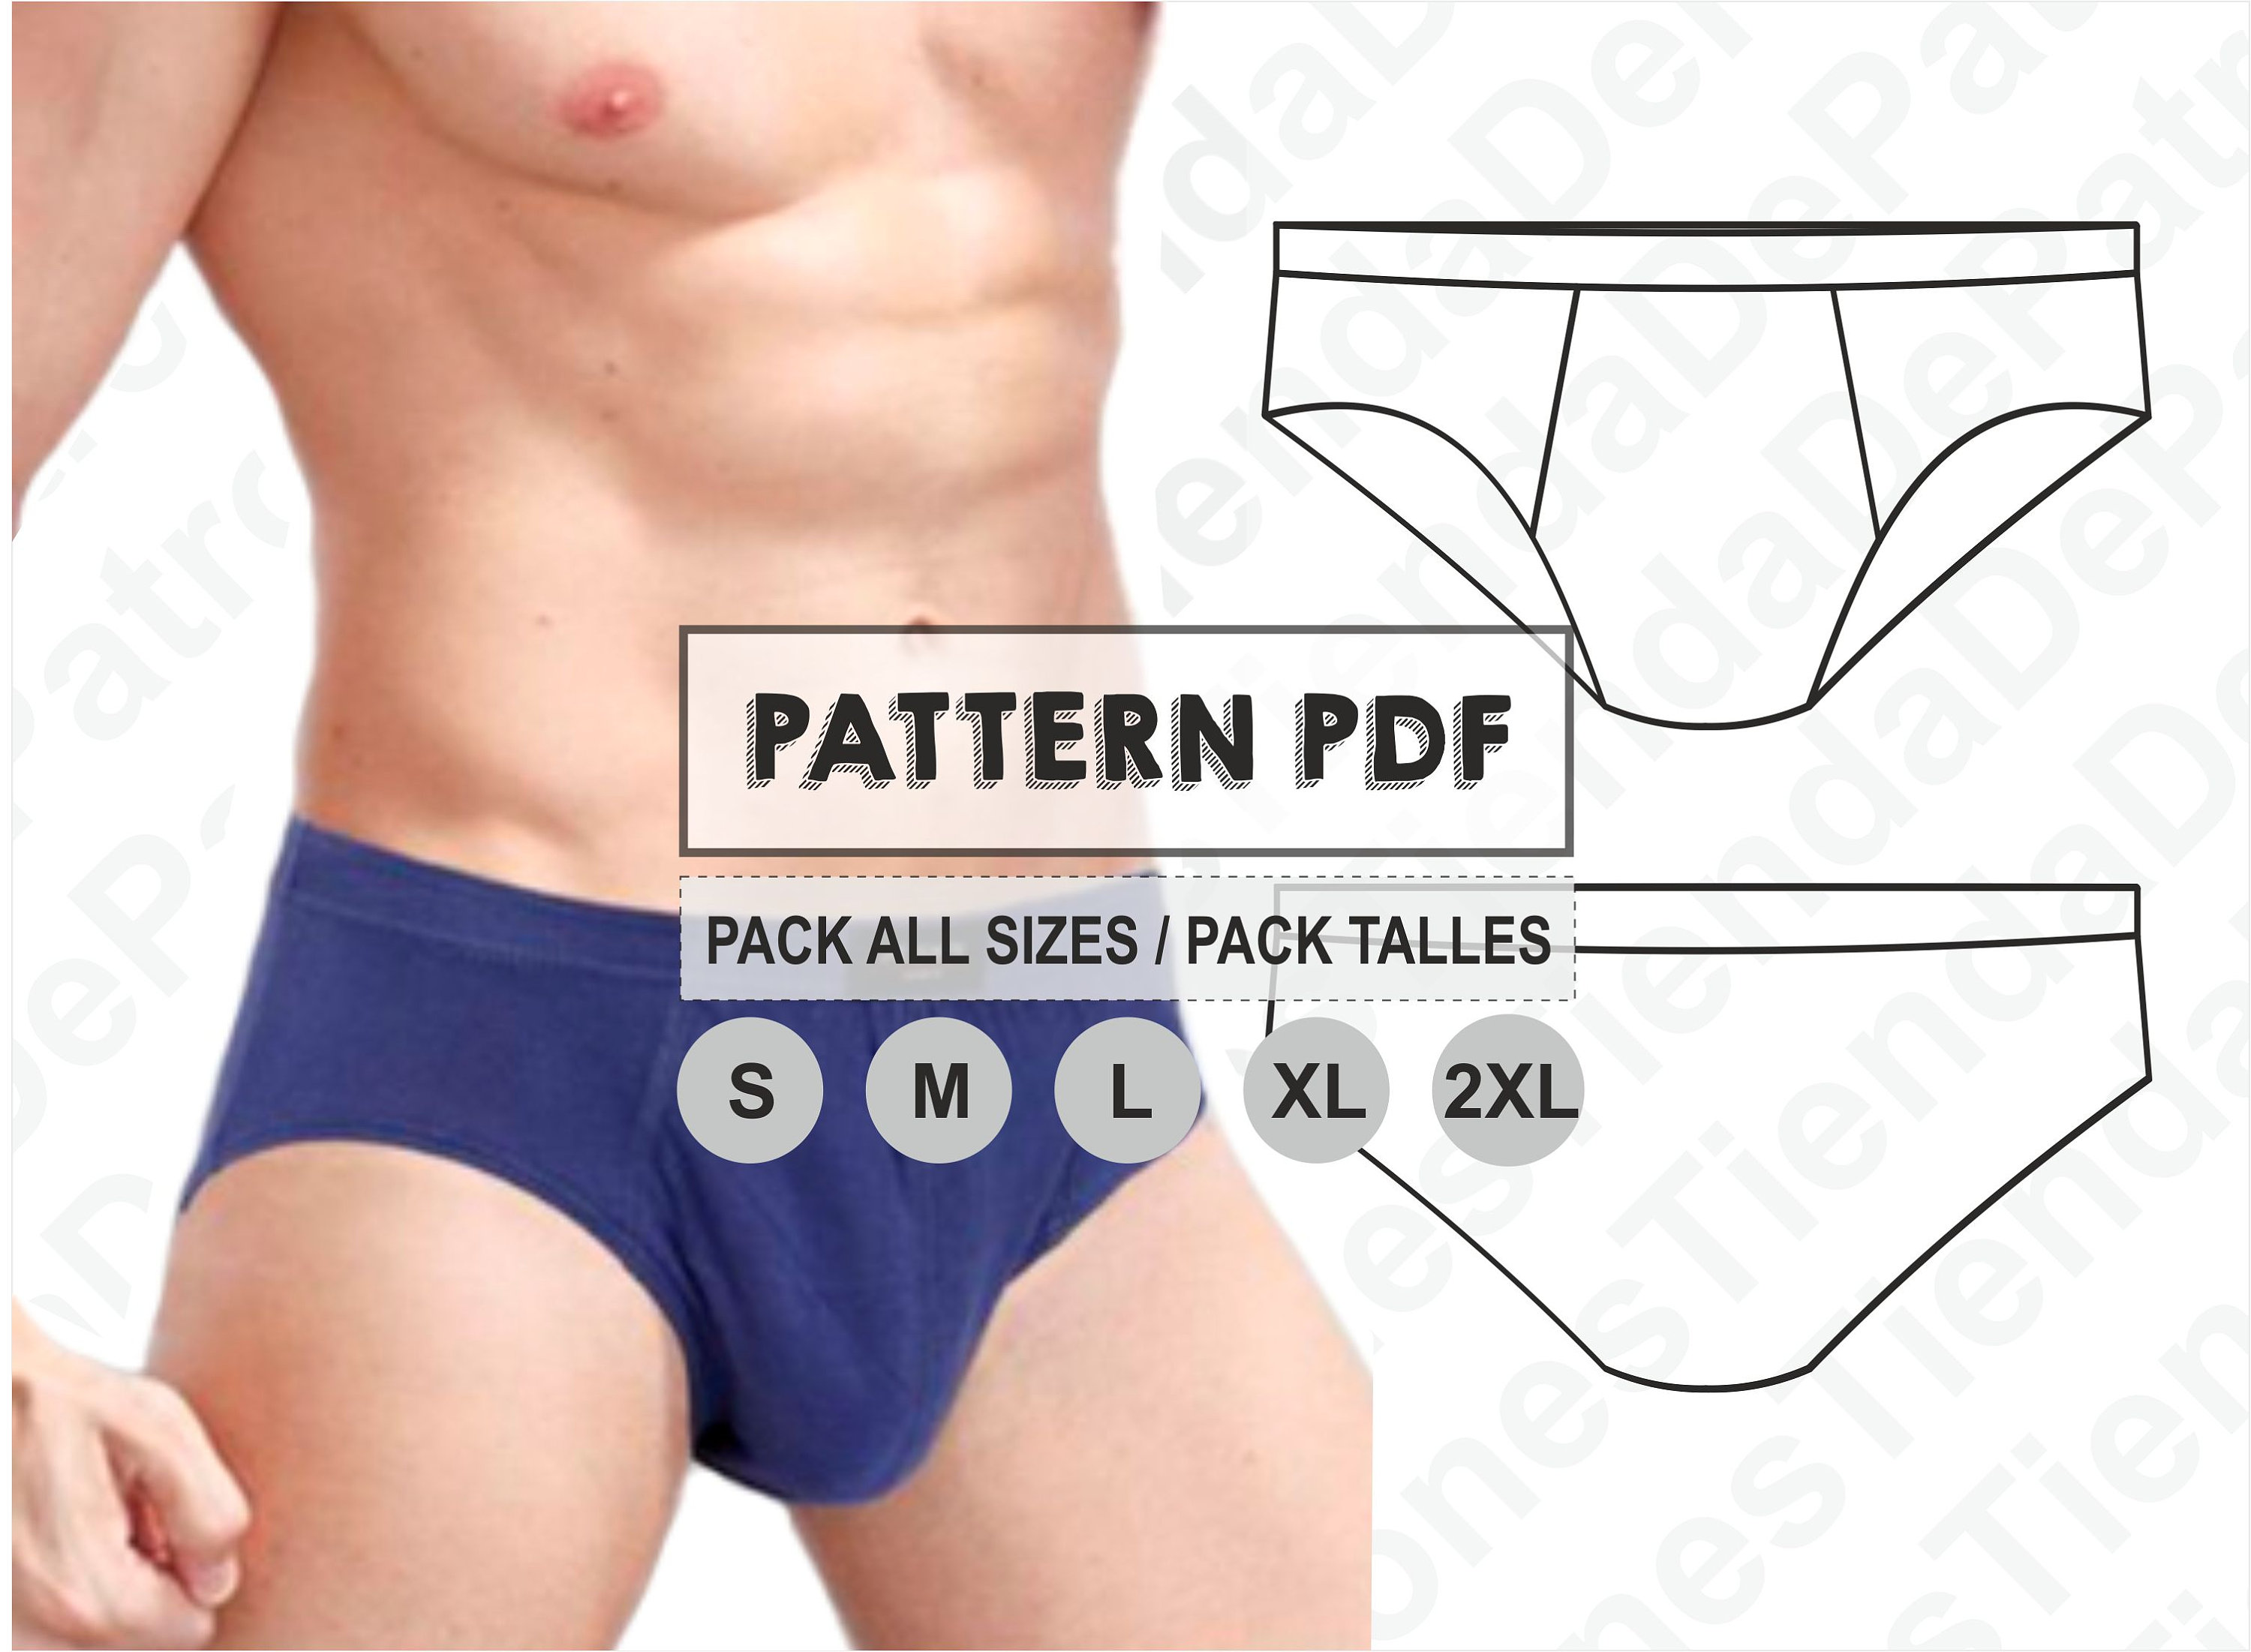 Mens Briefs / PDF Sewing Pattern / 6 Sizes: Xs to Xxl / 